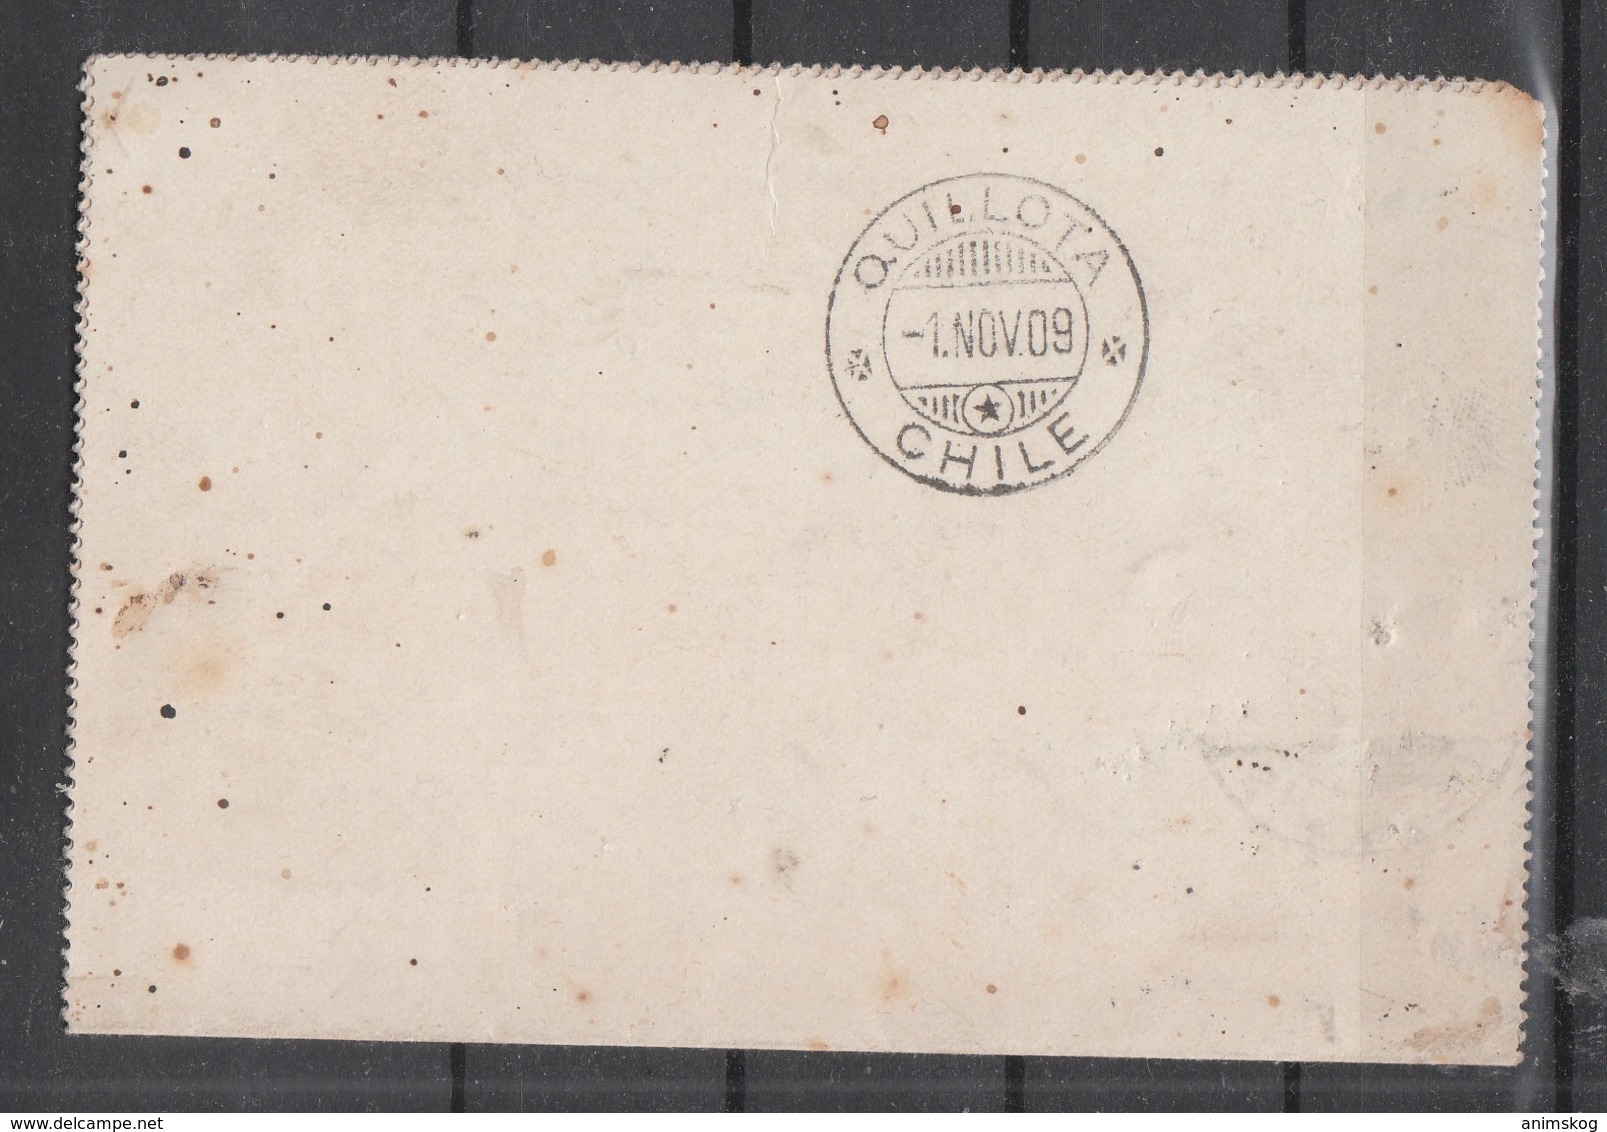 Chile 1909, Memorandum Postage, Gelaufen / Chile 1909, Memorandum Postage, Postally Used - Chile